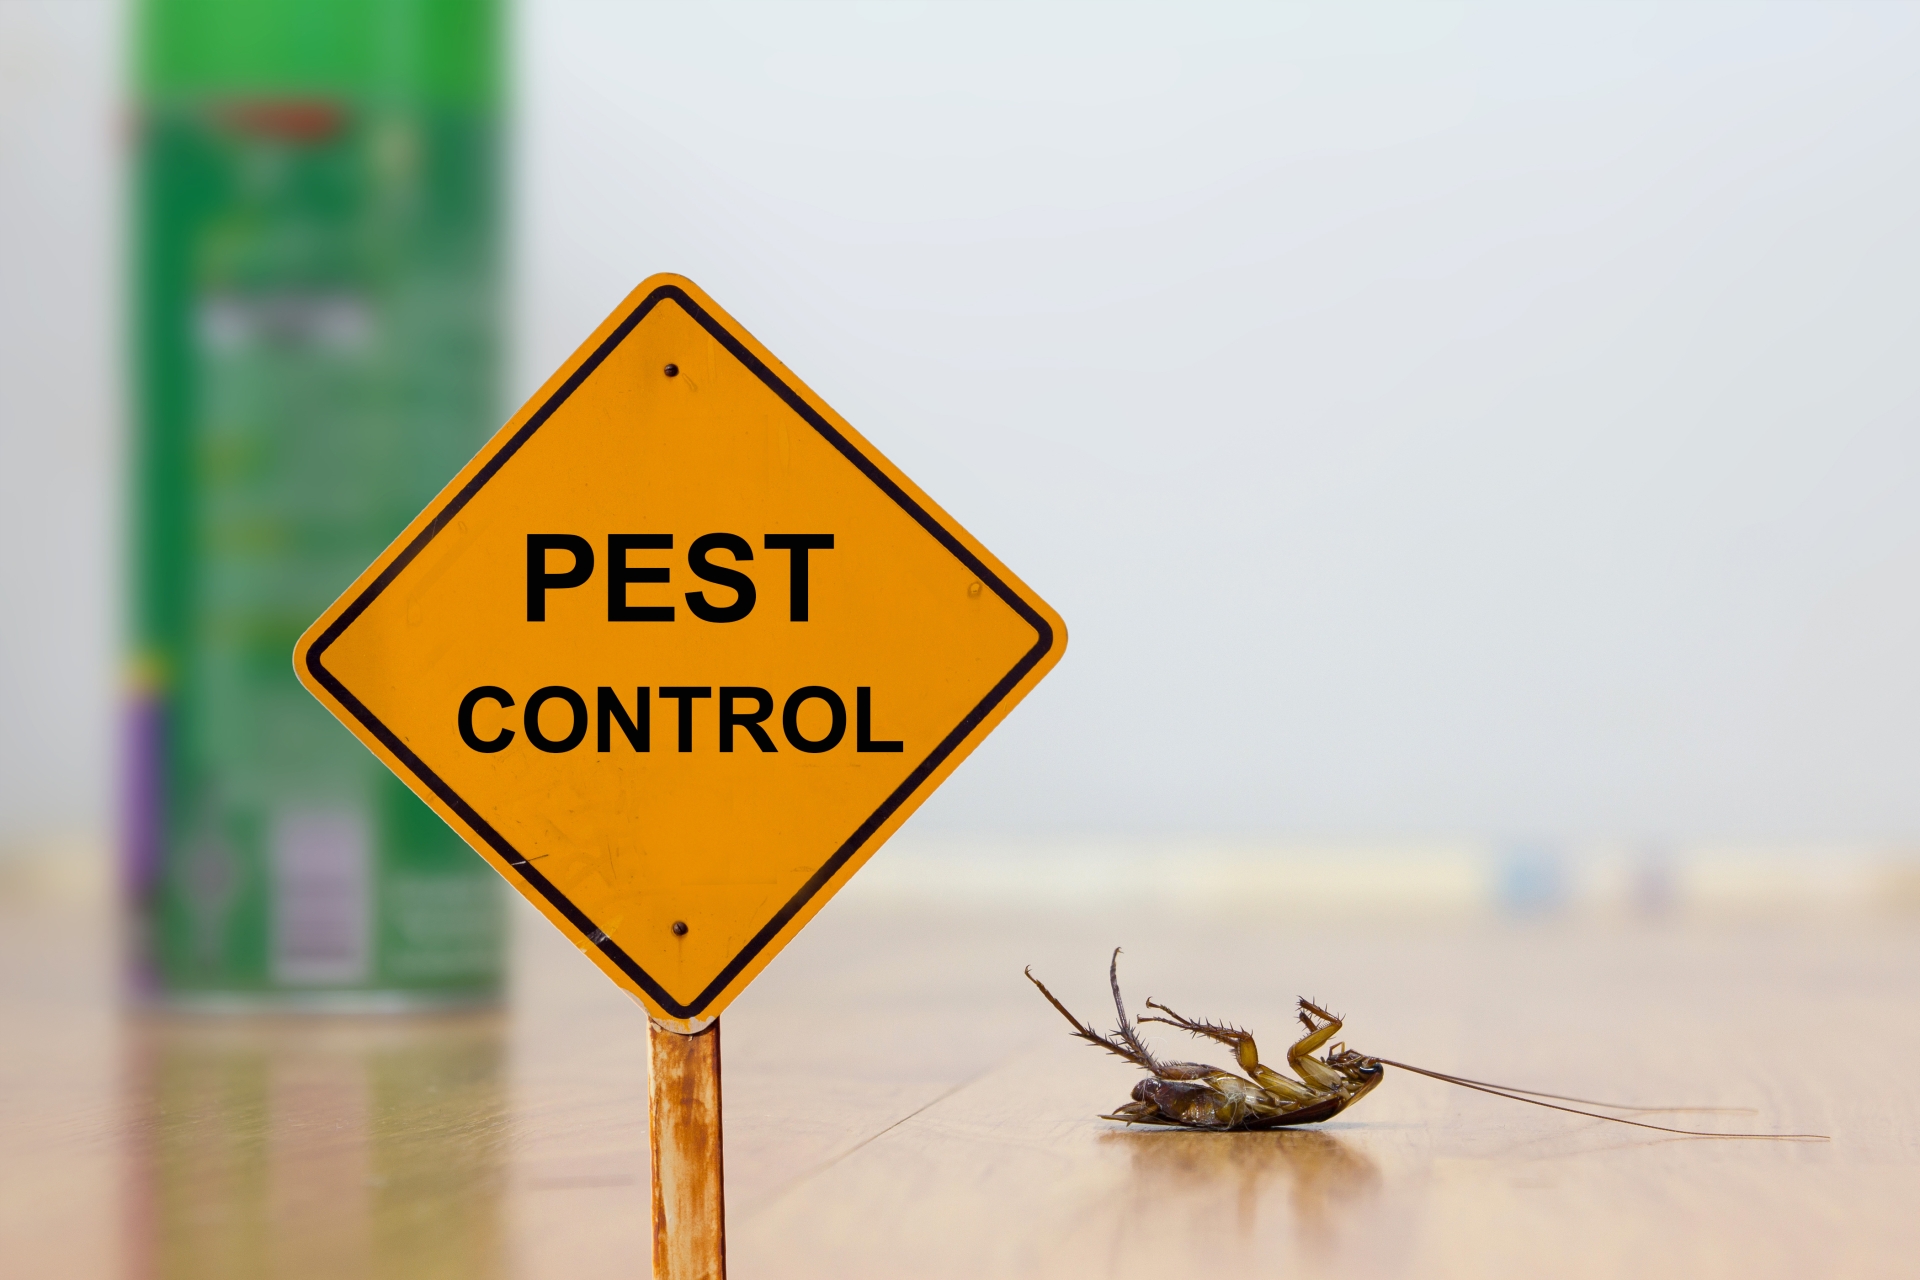 24 Hour Pest Control, Pest Control in Barnes, Castelnau, SW13. Call Now 020 8166 9746